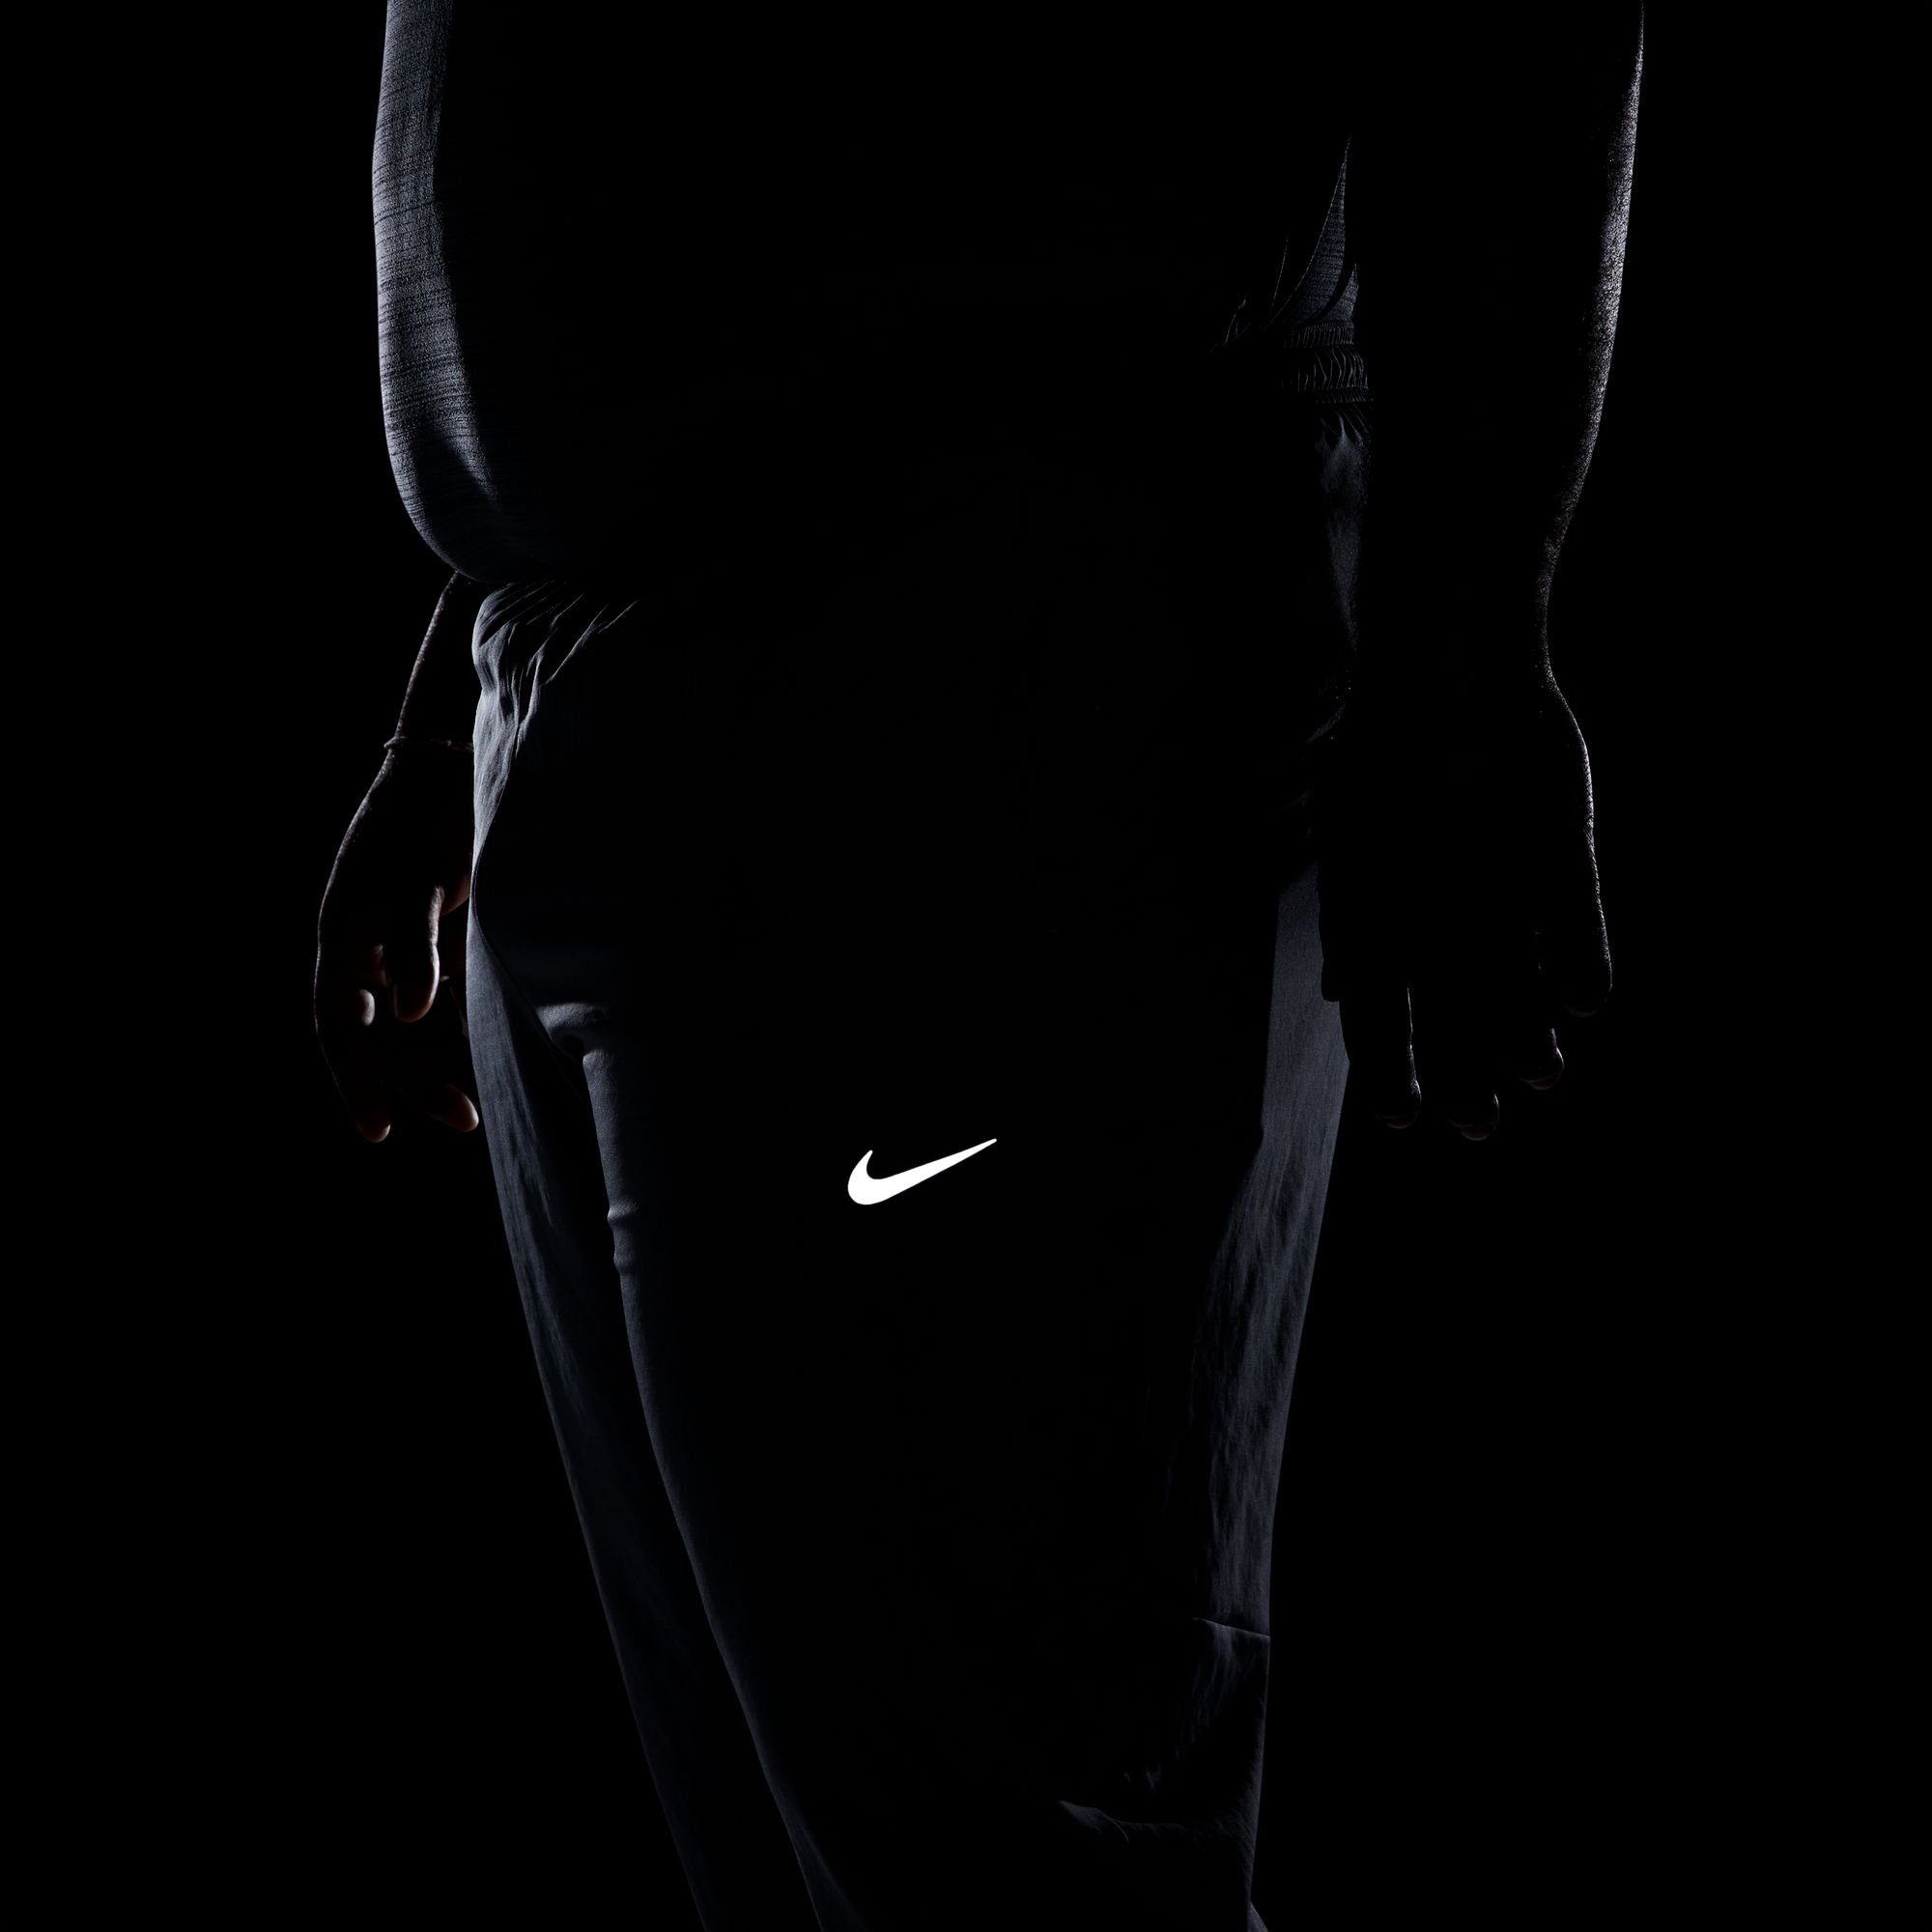 Nike Runningbroek DRI-FIT CHALLENGER MEN'S WOVEN RUNNING PANTS